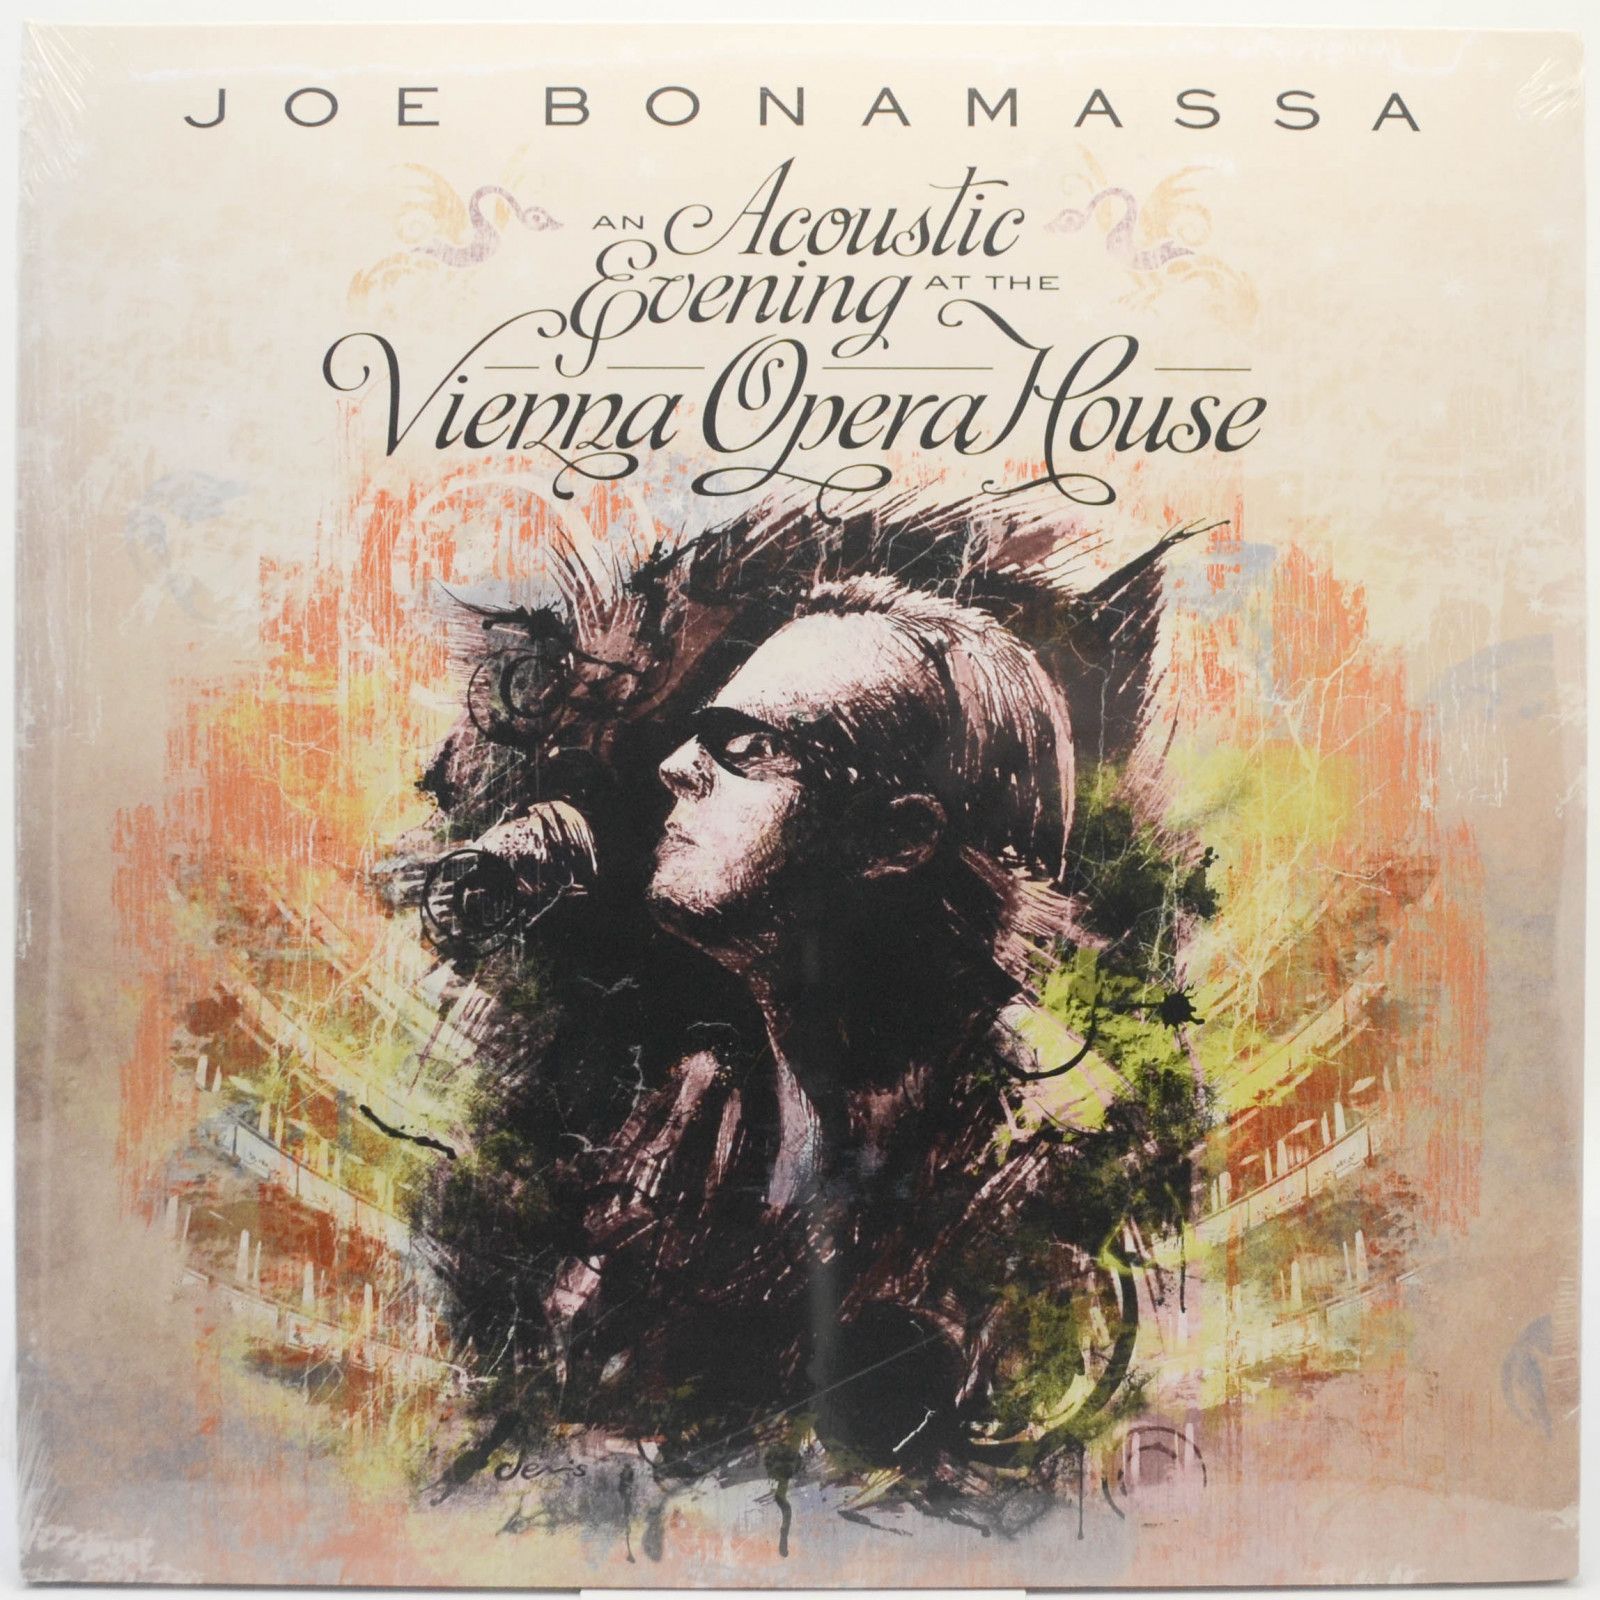 Joe Bonamassa — An Acoustic Evening At The Vienna Opera House (2LP), 2013